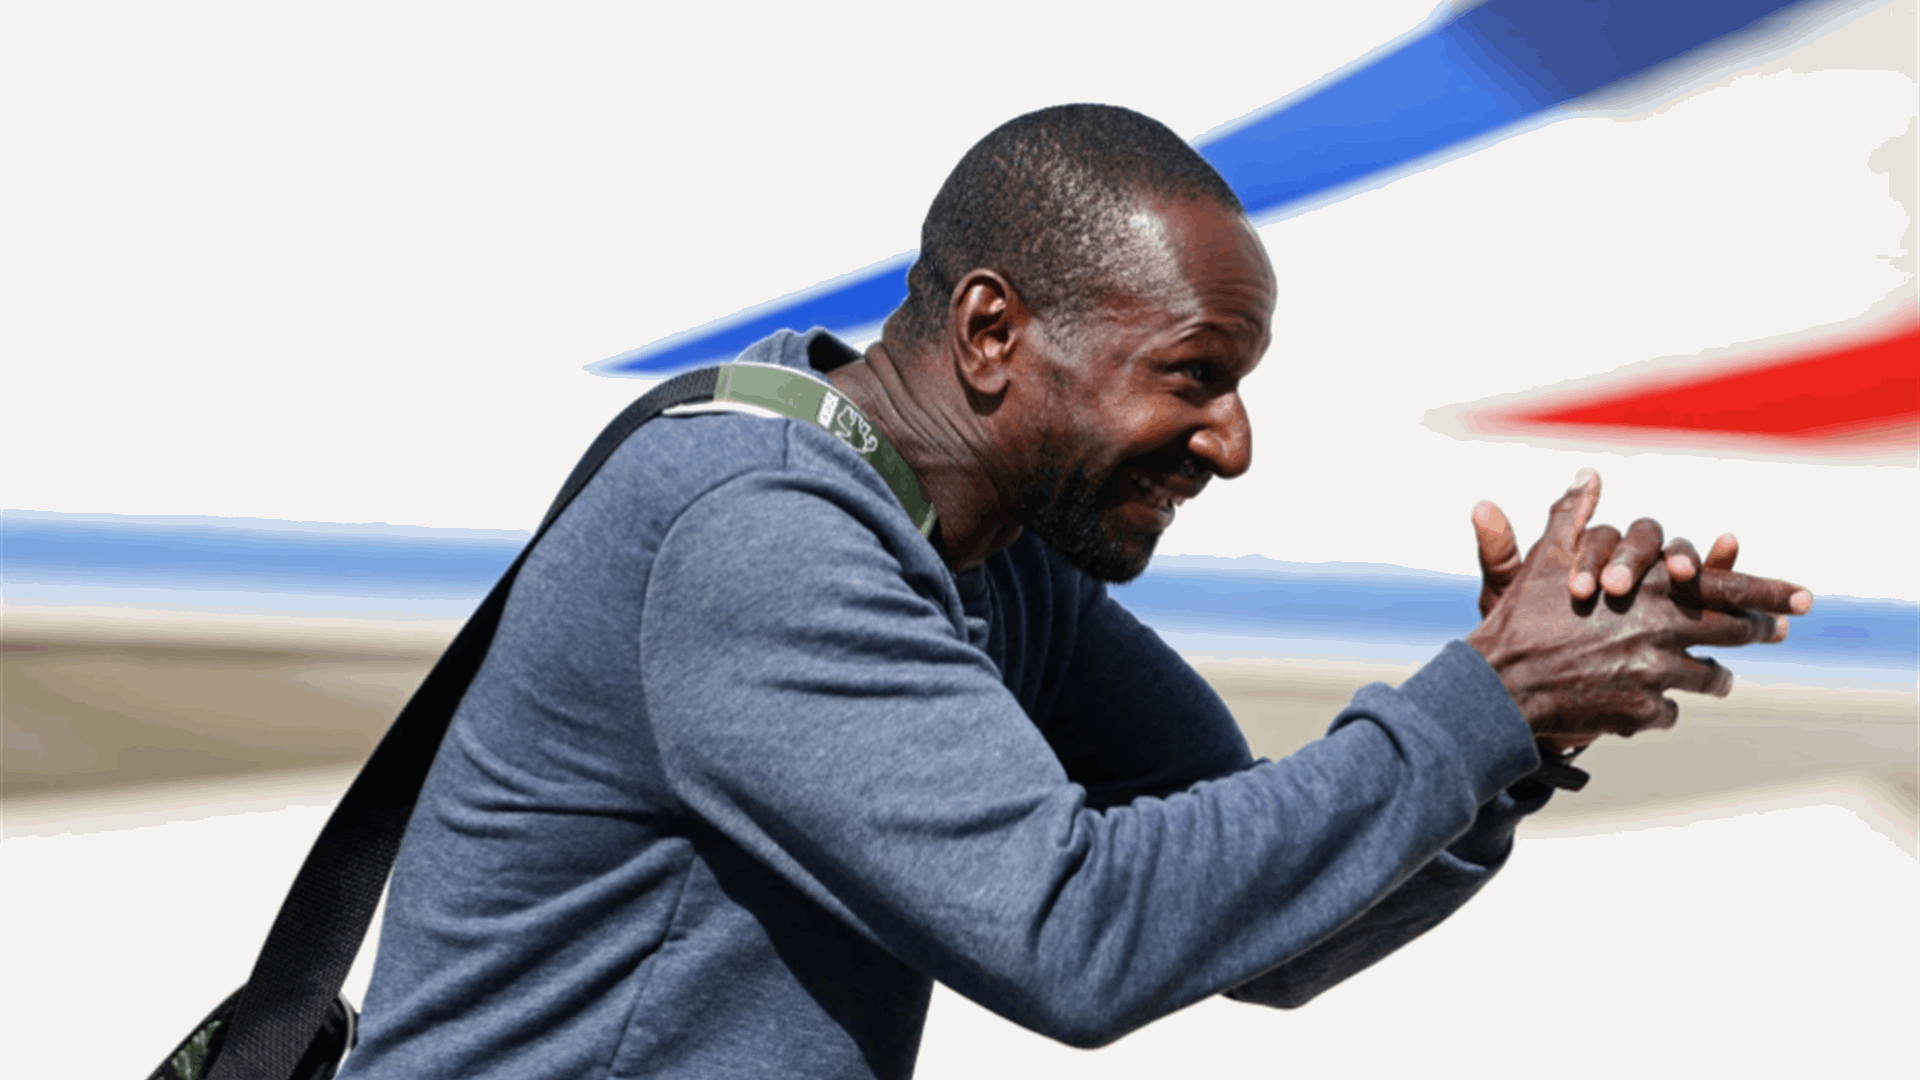 French journalist Dubois returns home after Mali captivity